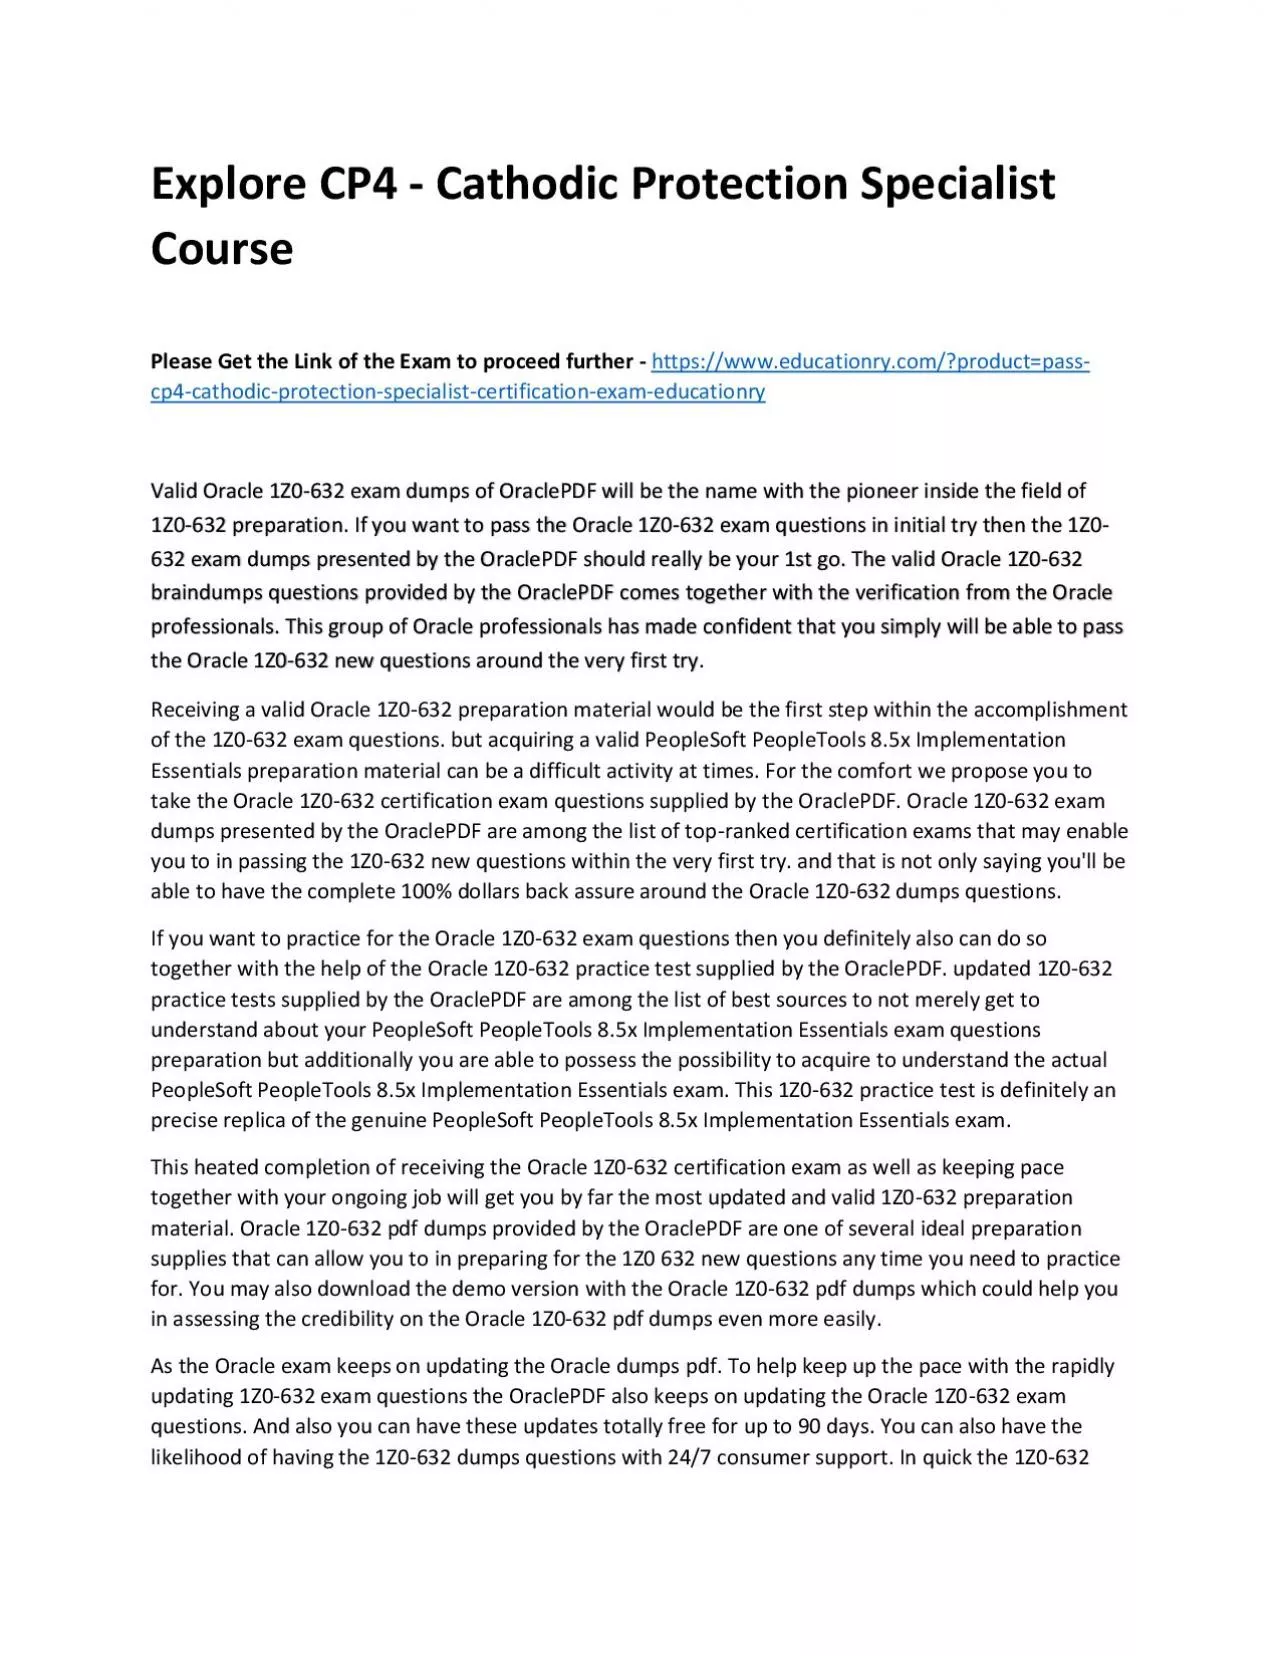 Explore CP4 - Cathodic Protection Specialist Practice Course